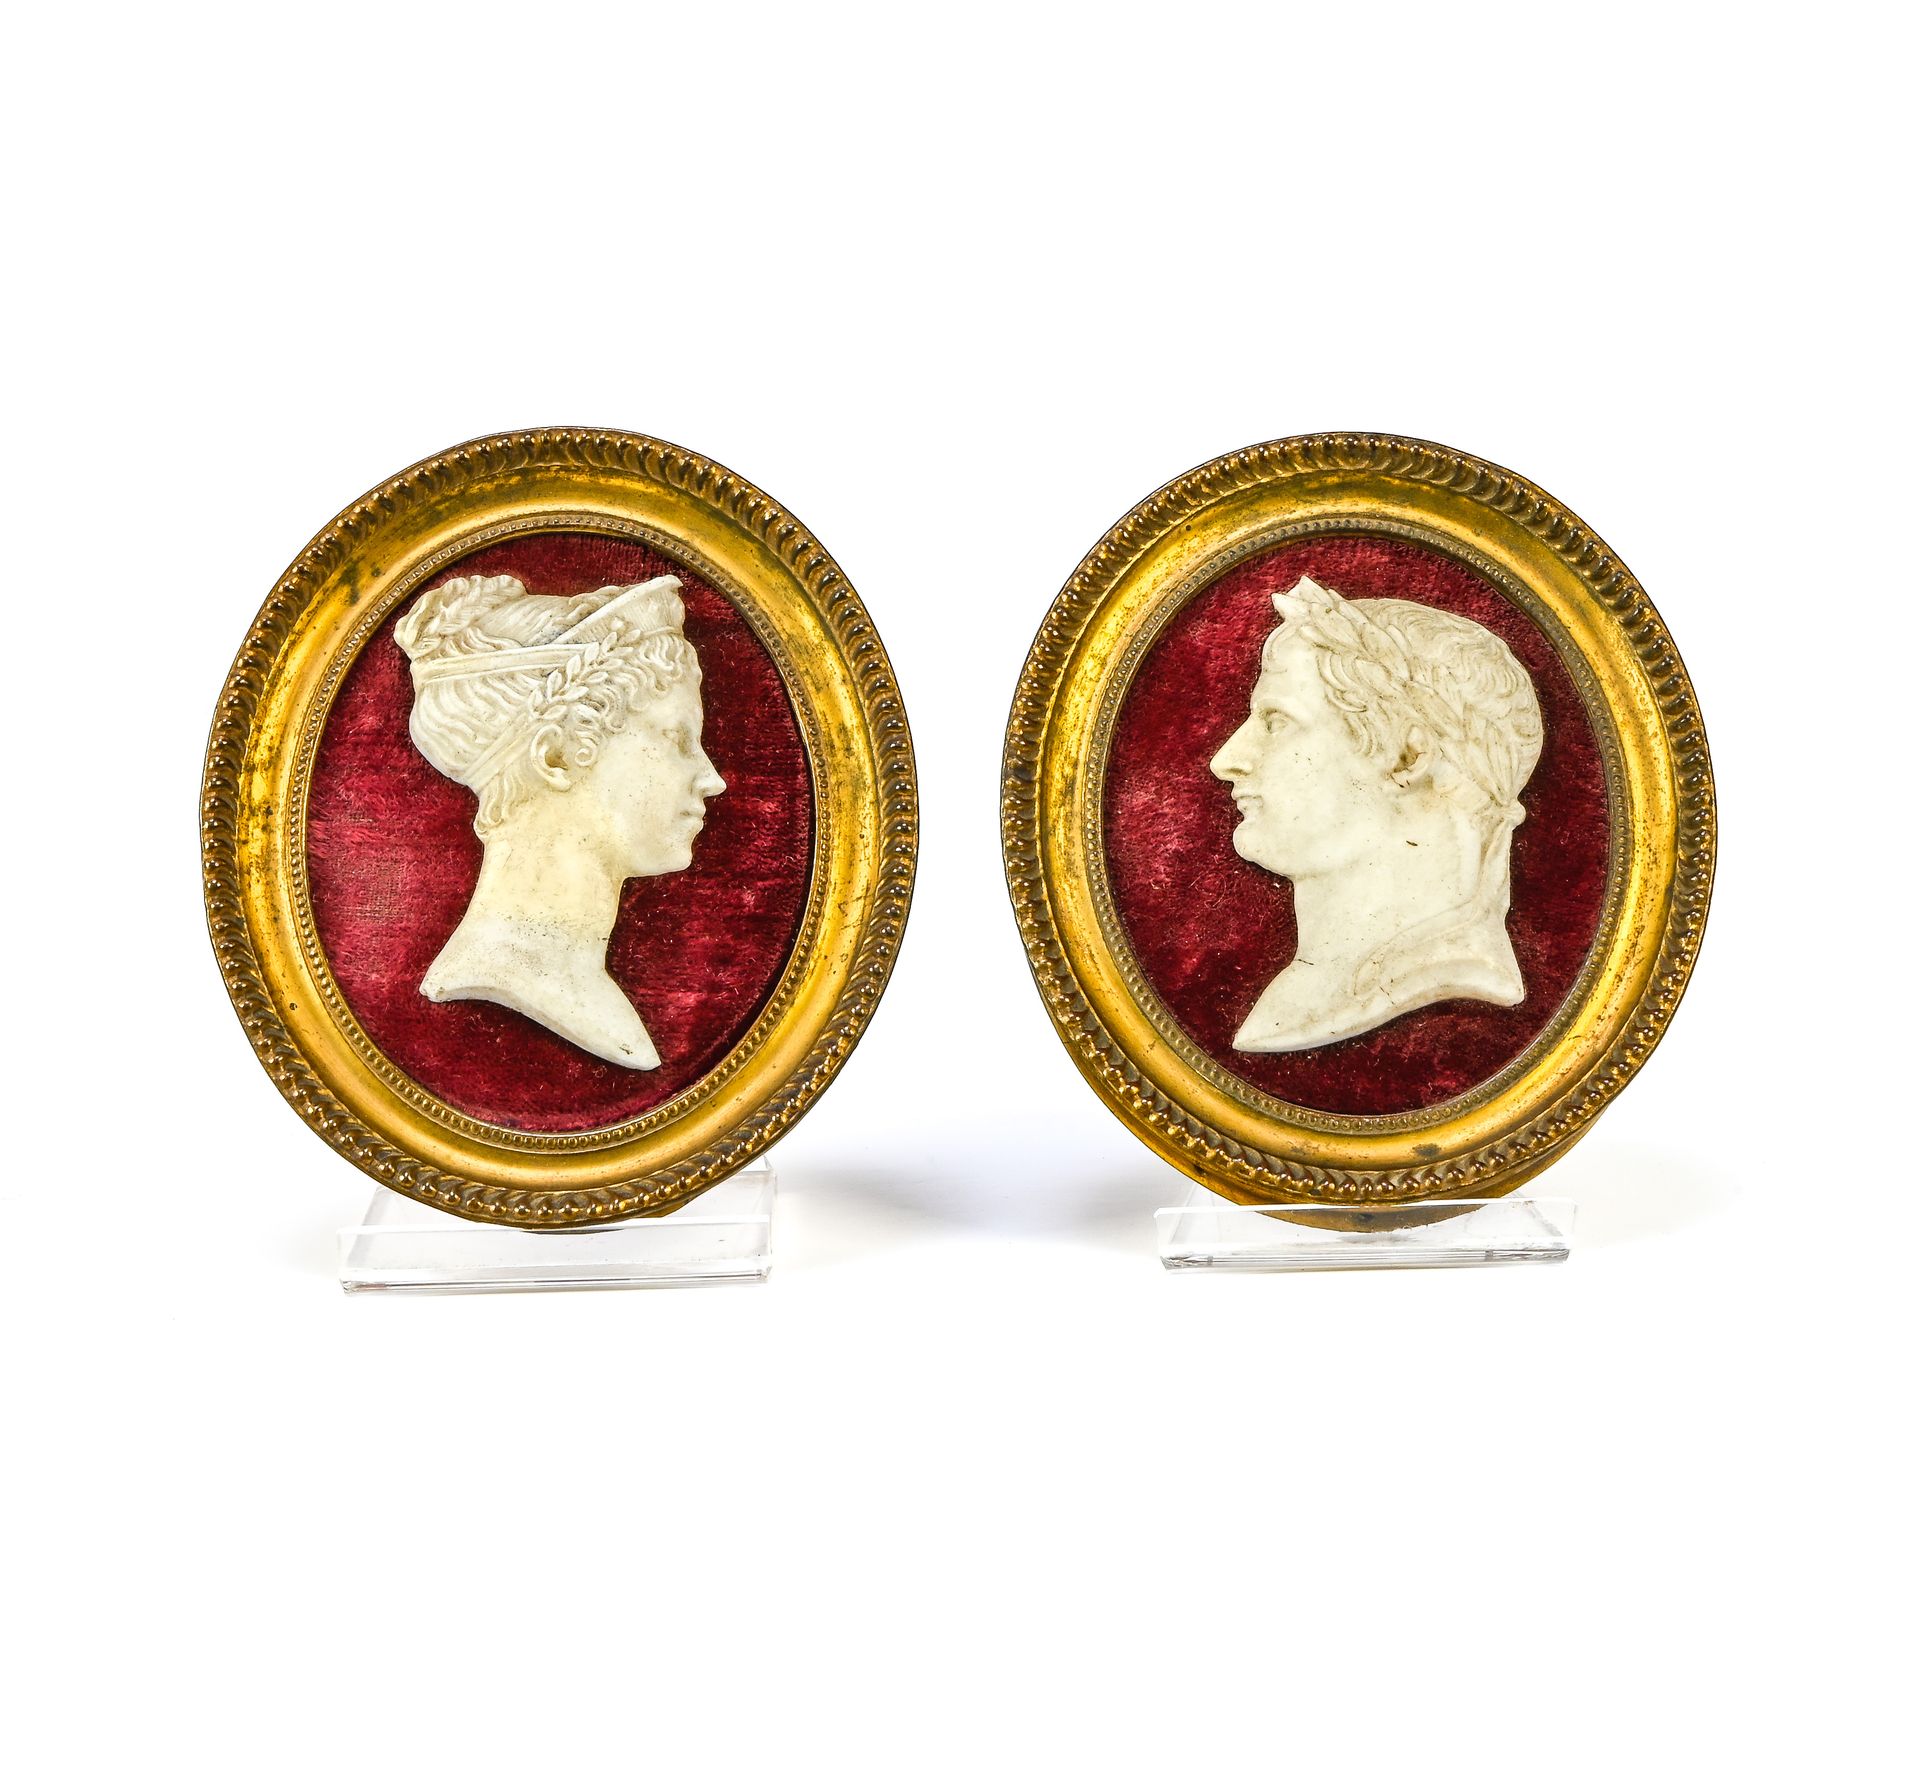 Napoléon et Joséphine Napoleon and Josephine

19TH CENTURY WORK

Pair of carved &hellip;